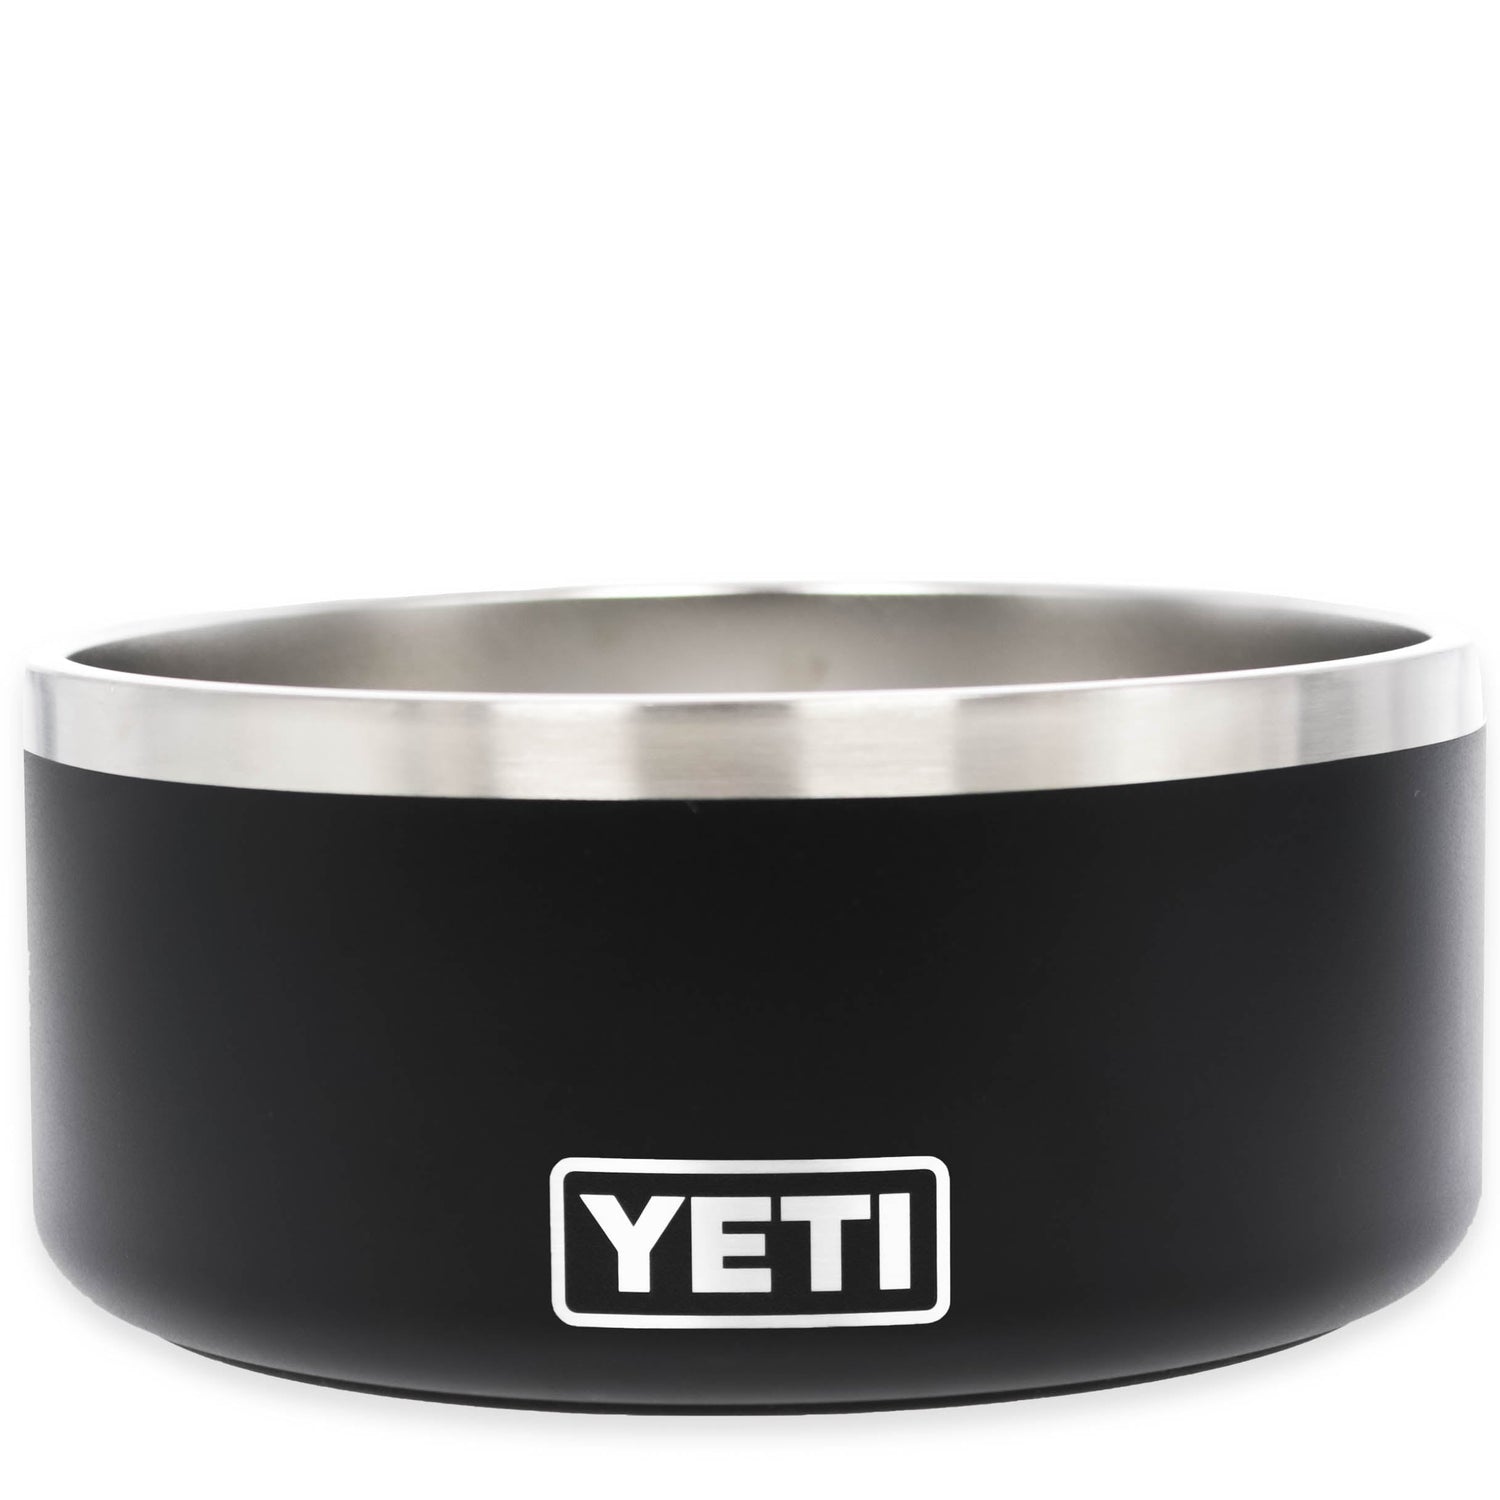 Yeti Dog Bowl, Boomer, Black, 8 Cups